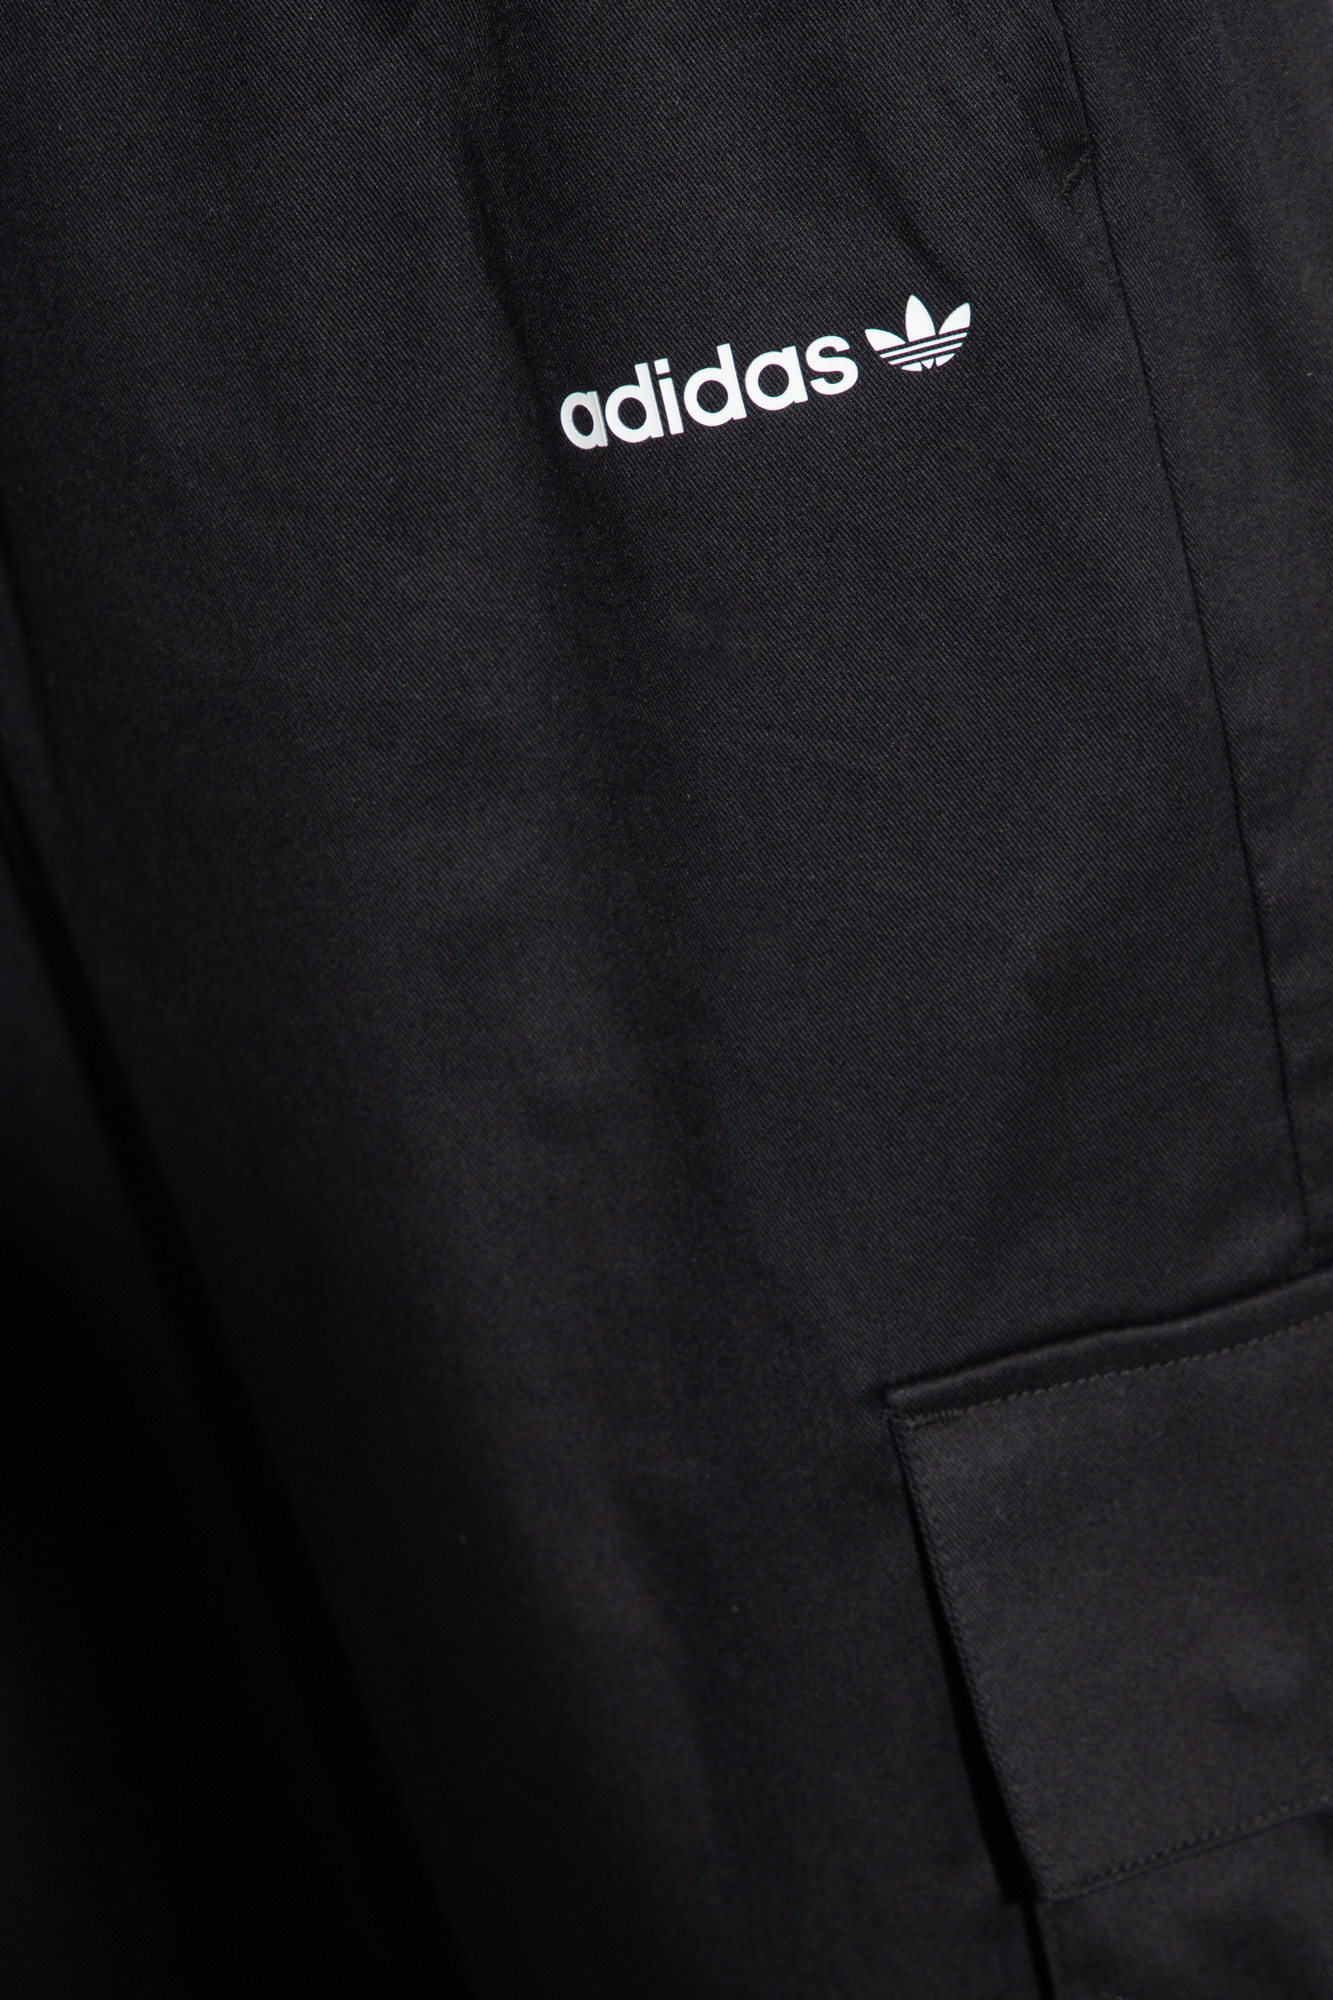 adidas Adicolor Classics 3-Stripes Cargo Pants - Black | Men's Lifestyle |  adidas US